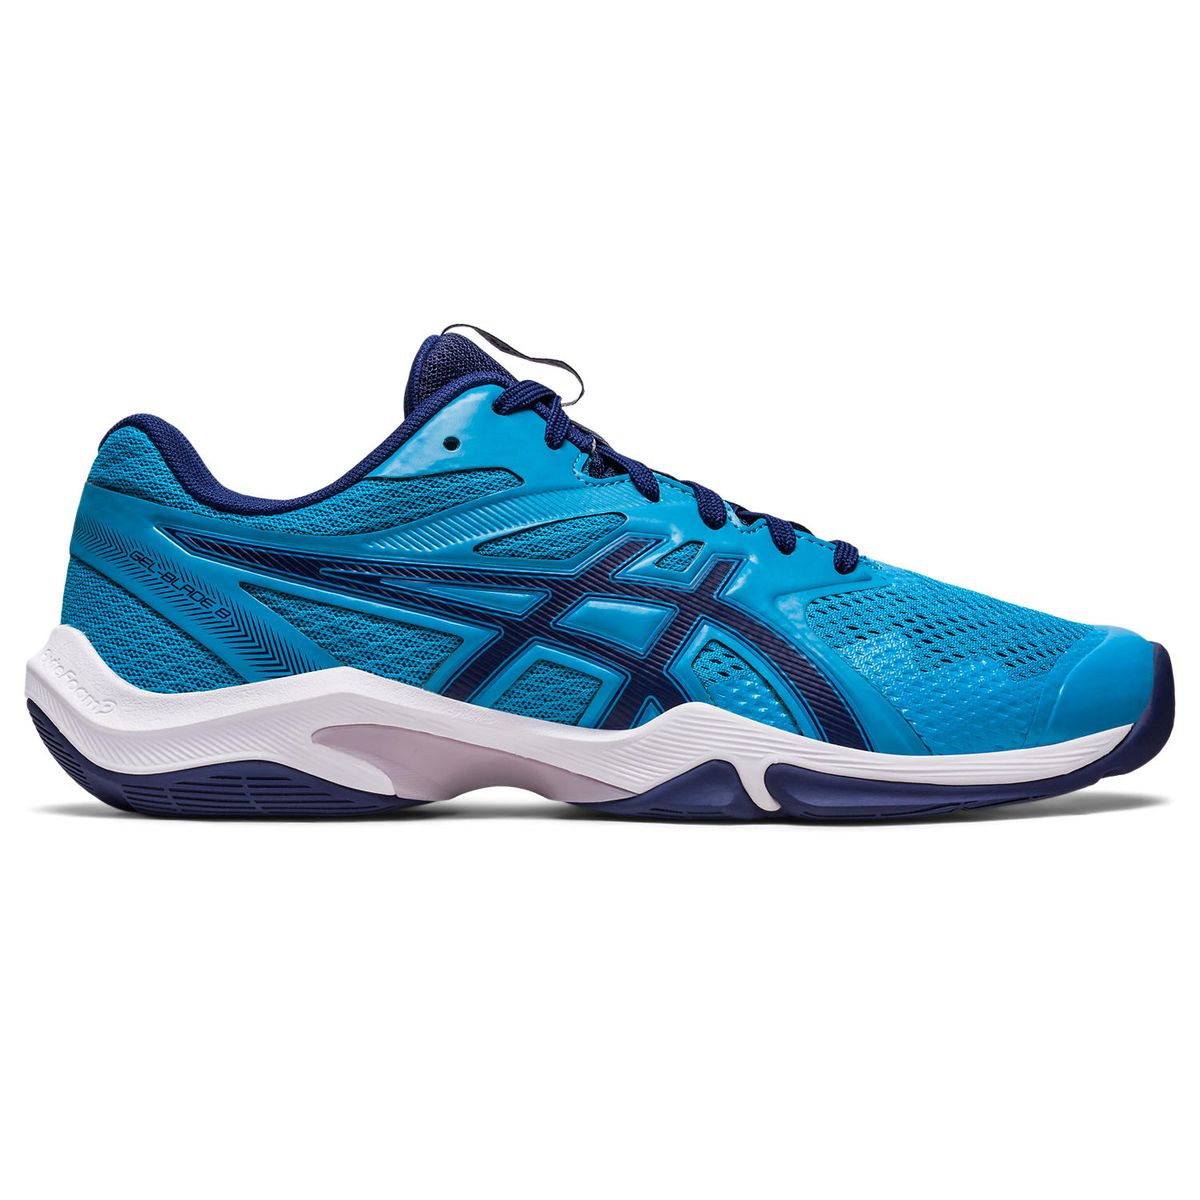 ASICS Men's Gel-Blade 8 Squash Shoes - Island Blue/Indigo Blue | Buy ...